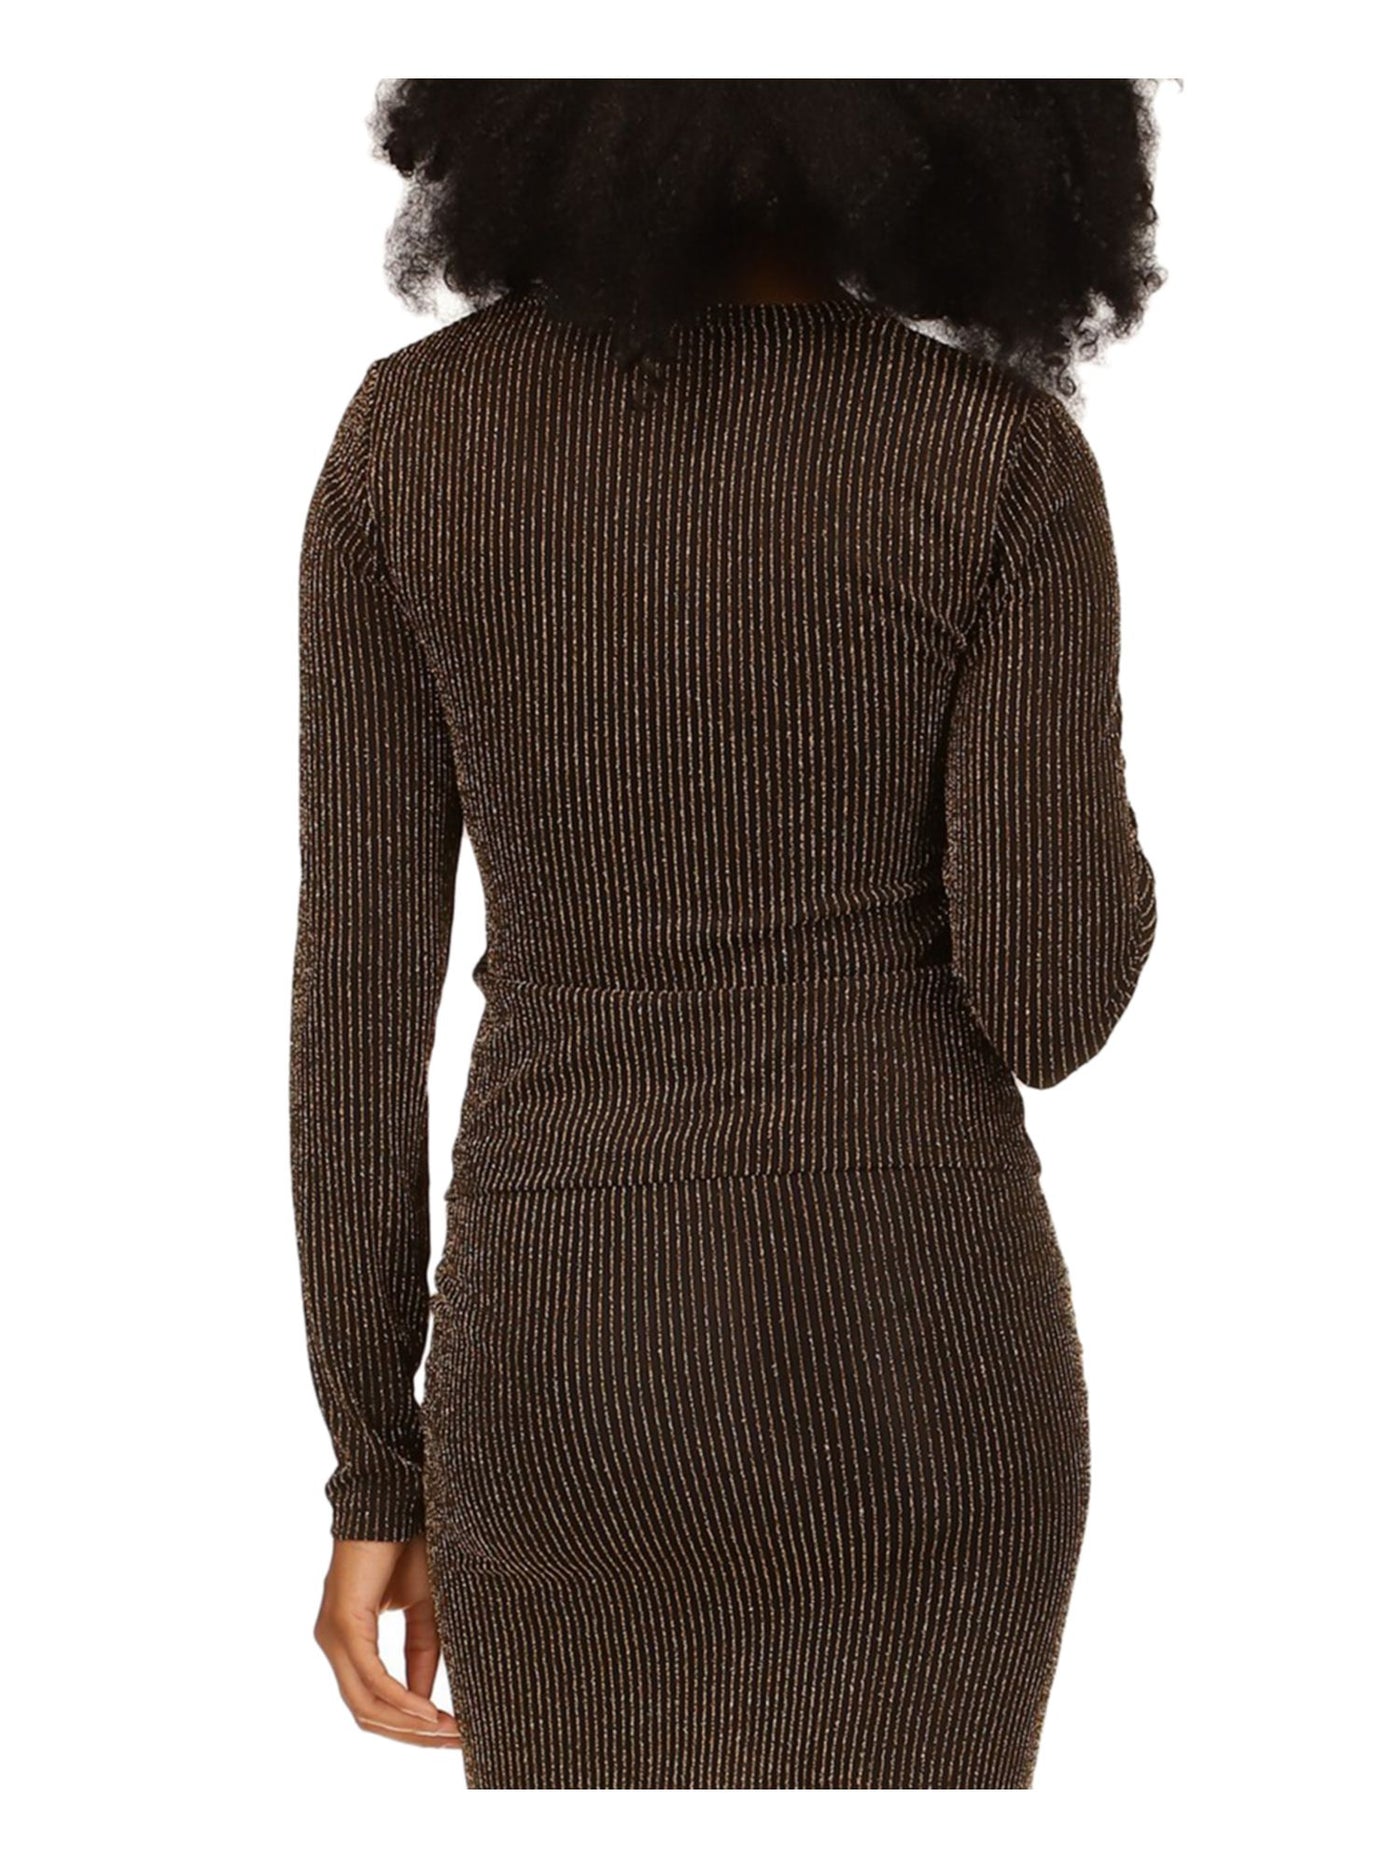 MICHAEL MICHAEL KORS Womens Black Cut Out Striped Long Sleeve Round Neck Short Party Body Con Dress XL